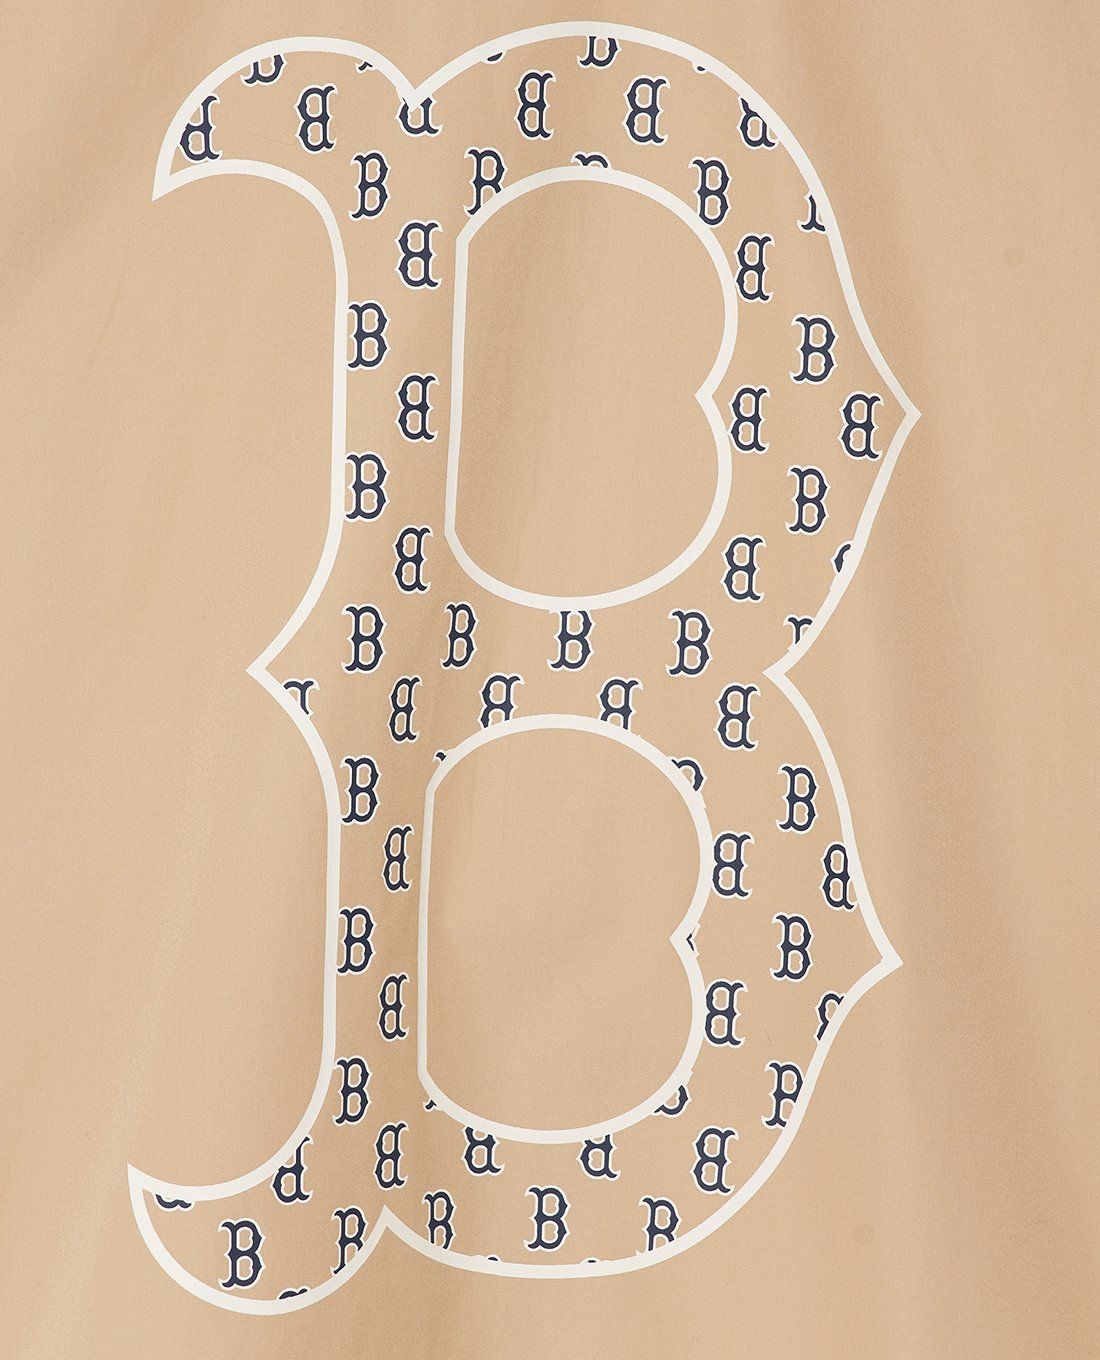 Túi MLB B Basic Big Logo Canvas Small Tote Bag Boston Red Sox DBrown